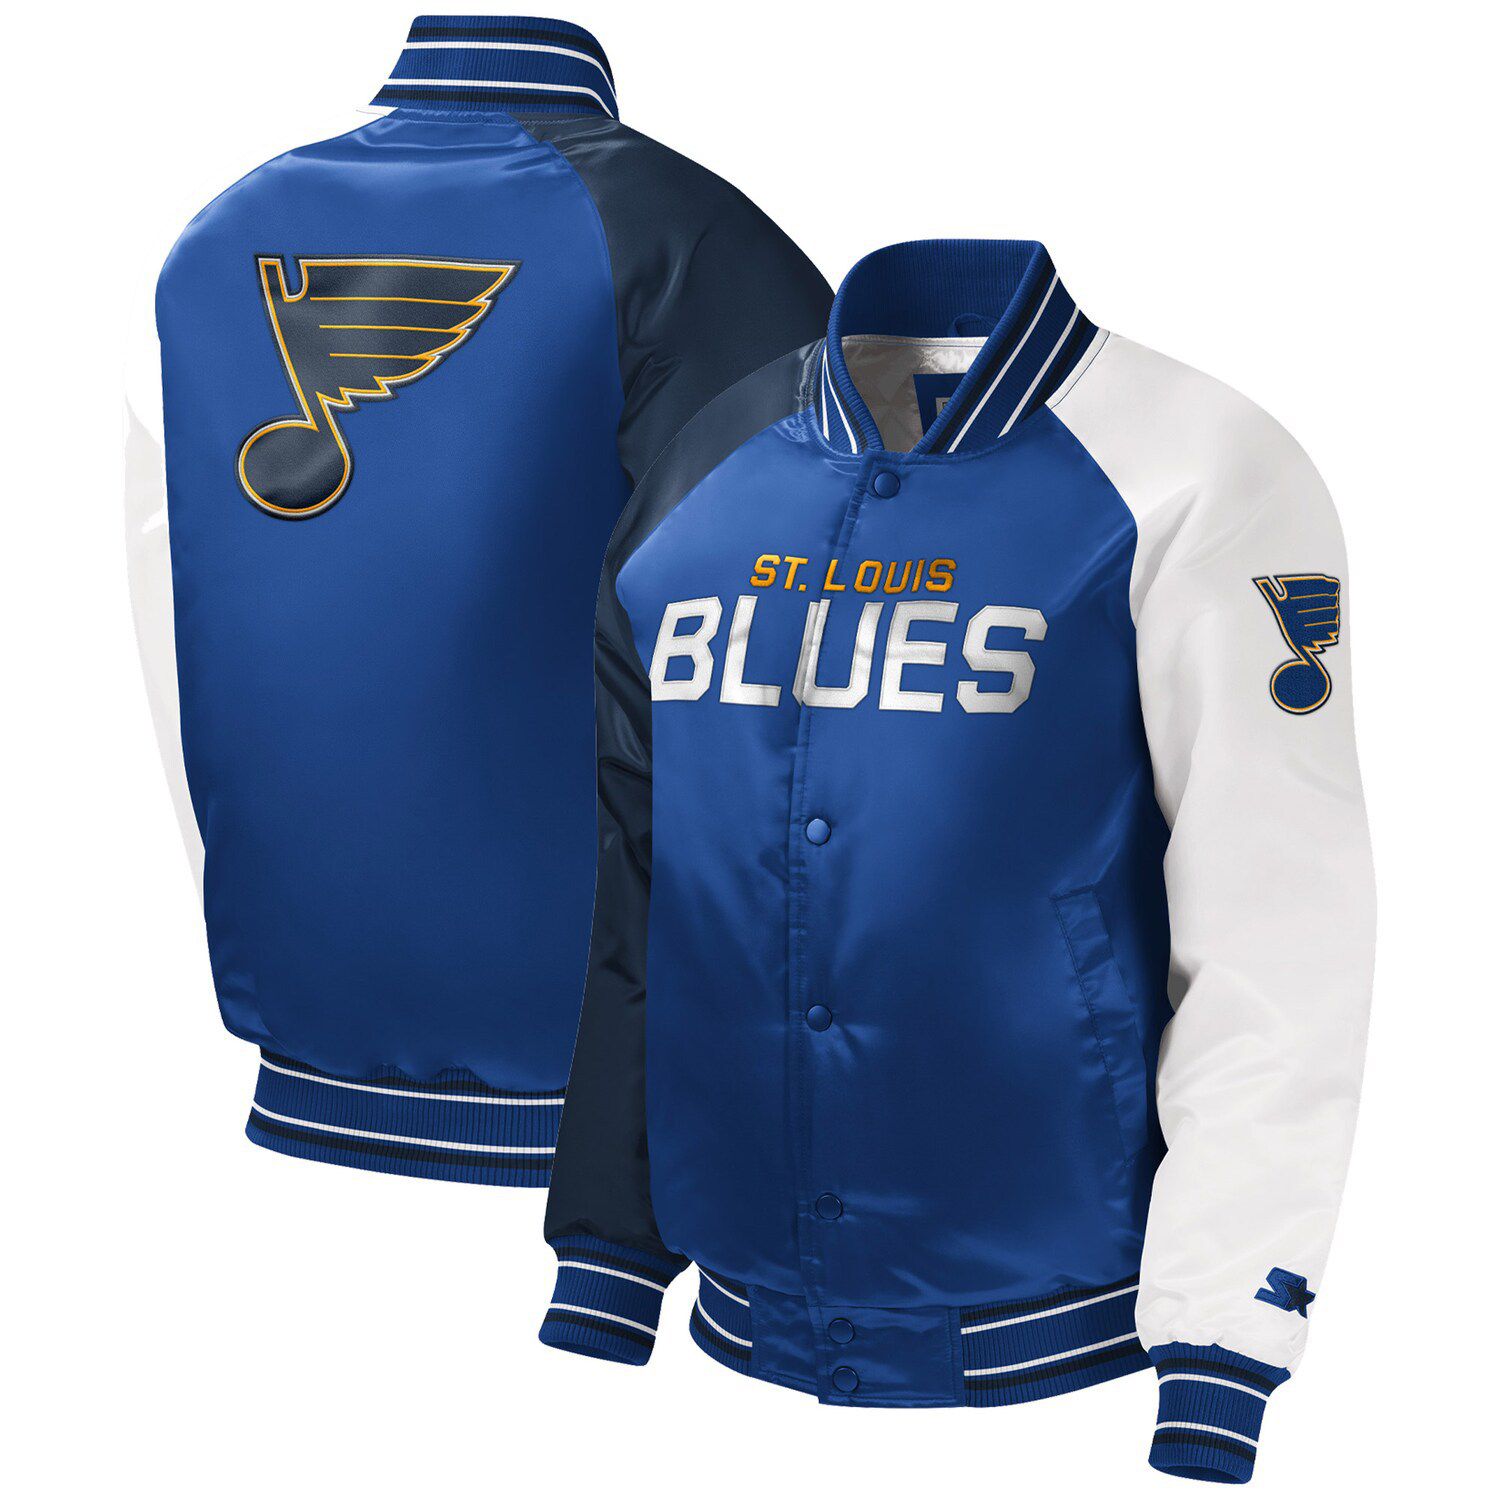 Men's adidas Blue St. Louis Blues Full-Zip Track Jacket